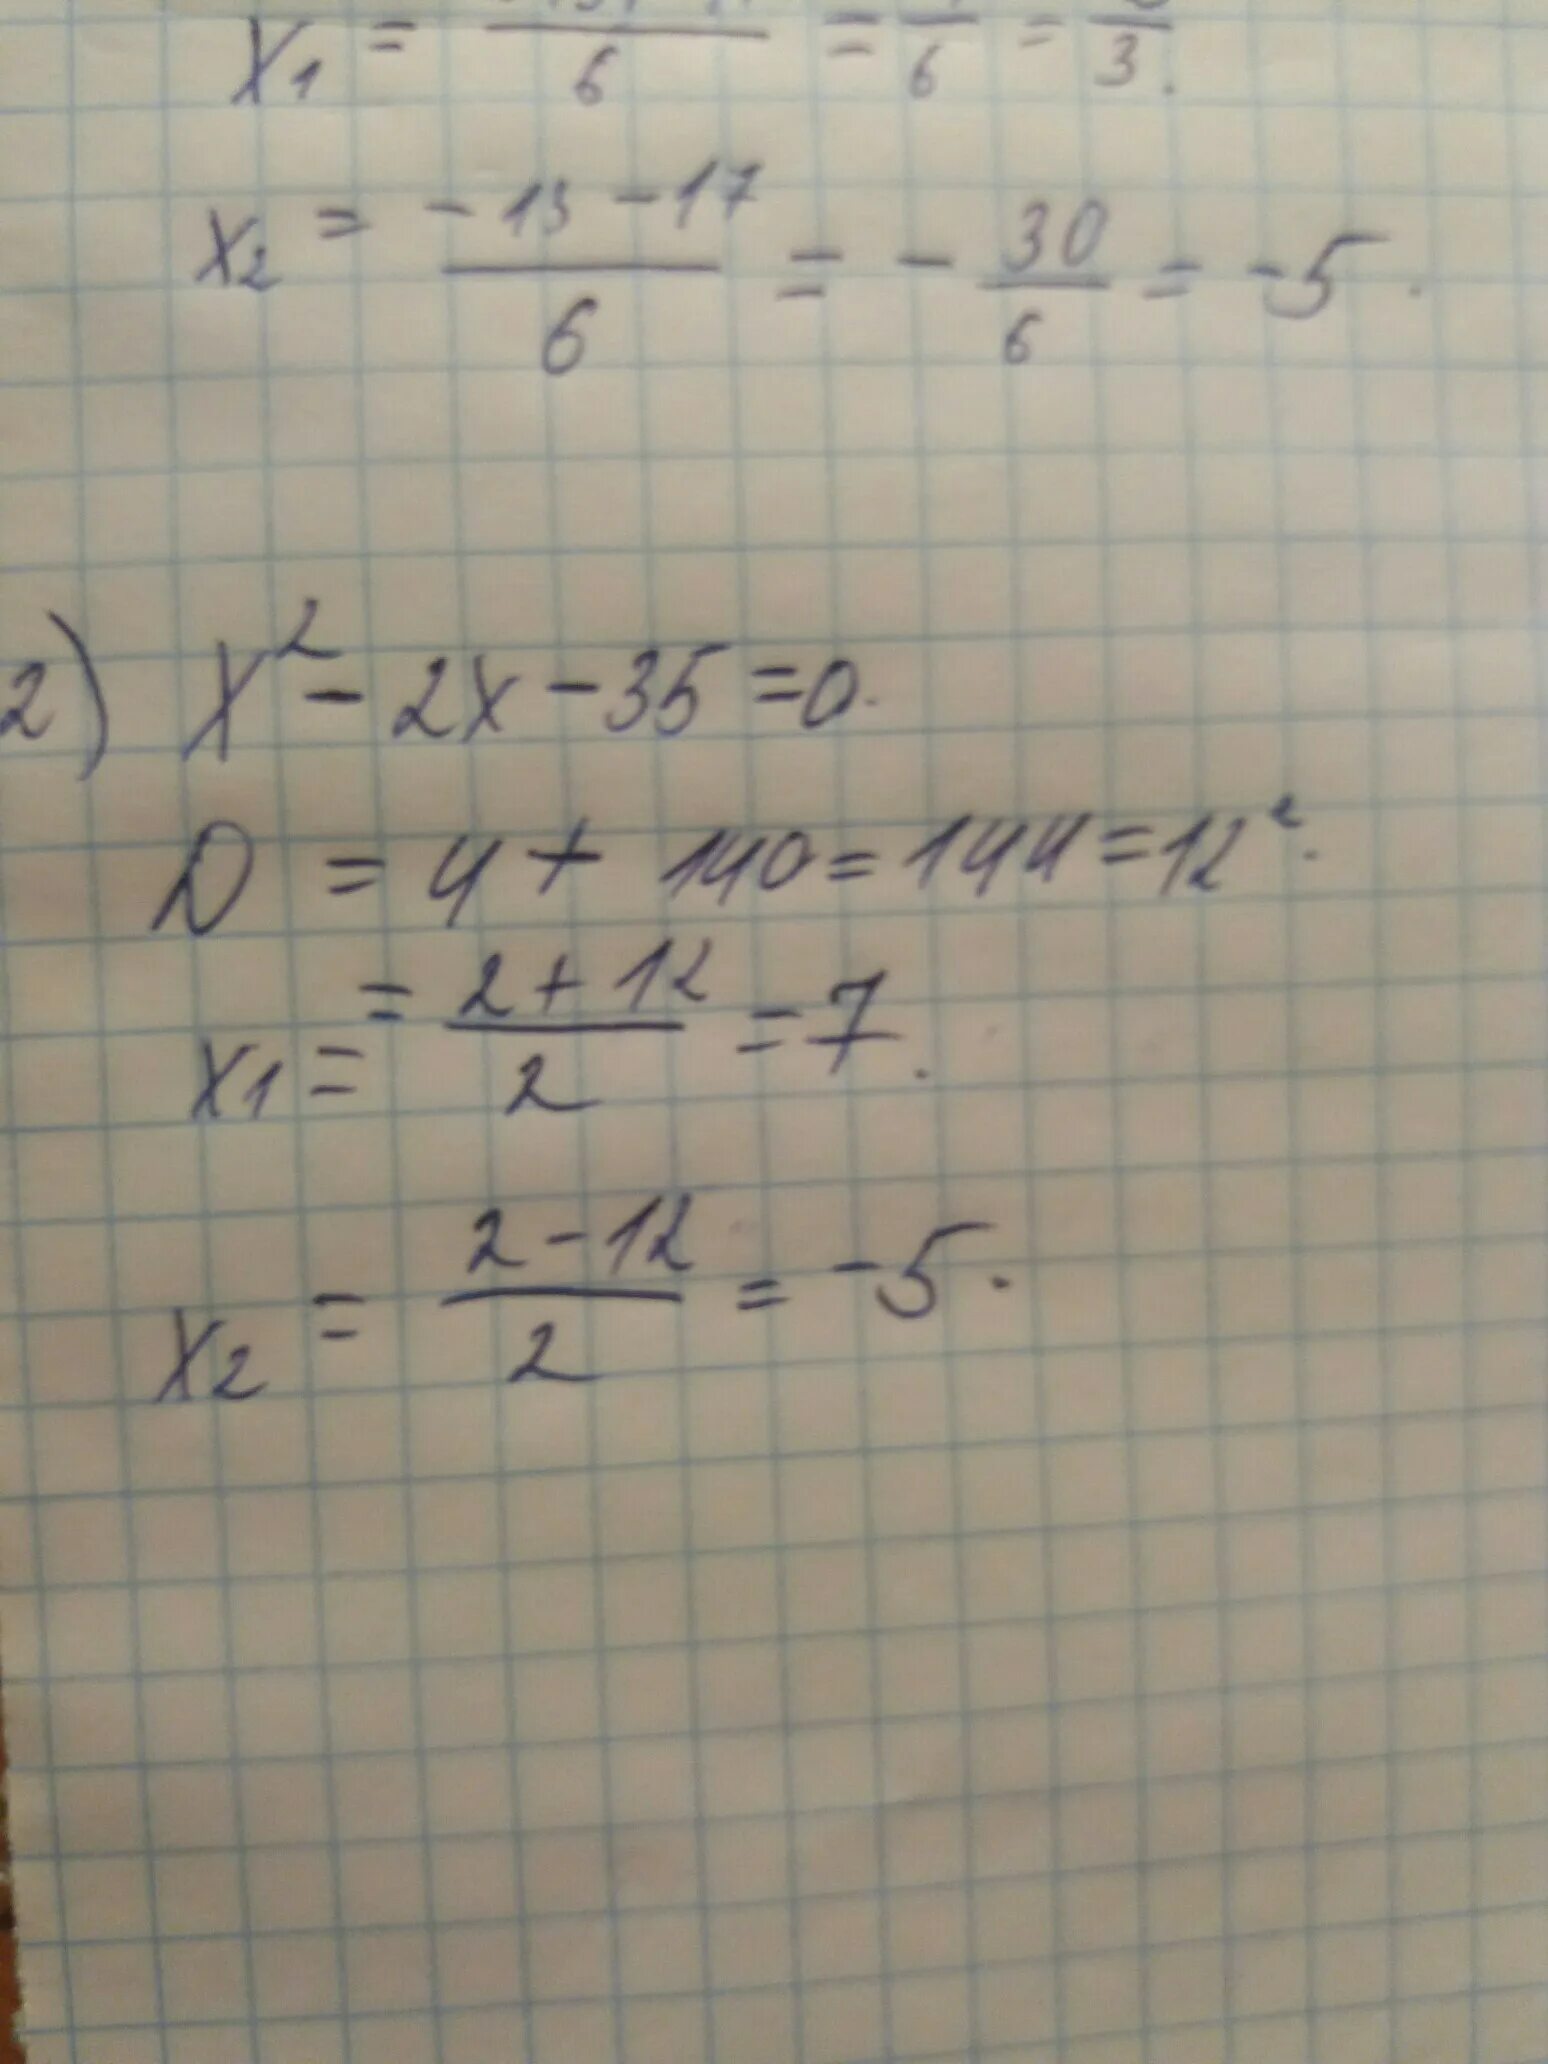 0 5 10x 6 x 6. 7x+10=5x+2. (10-X)(10+X). 3x x 10 2 x 6. 7|X|-3(X+2)=-10.